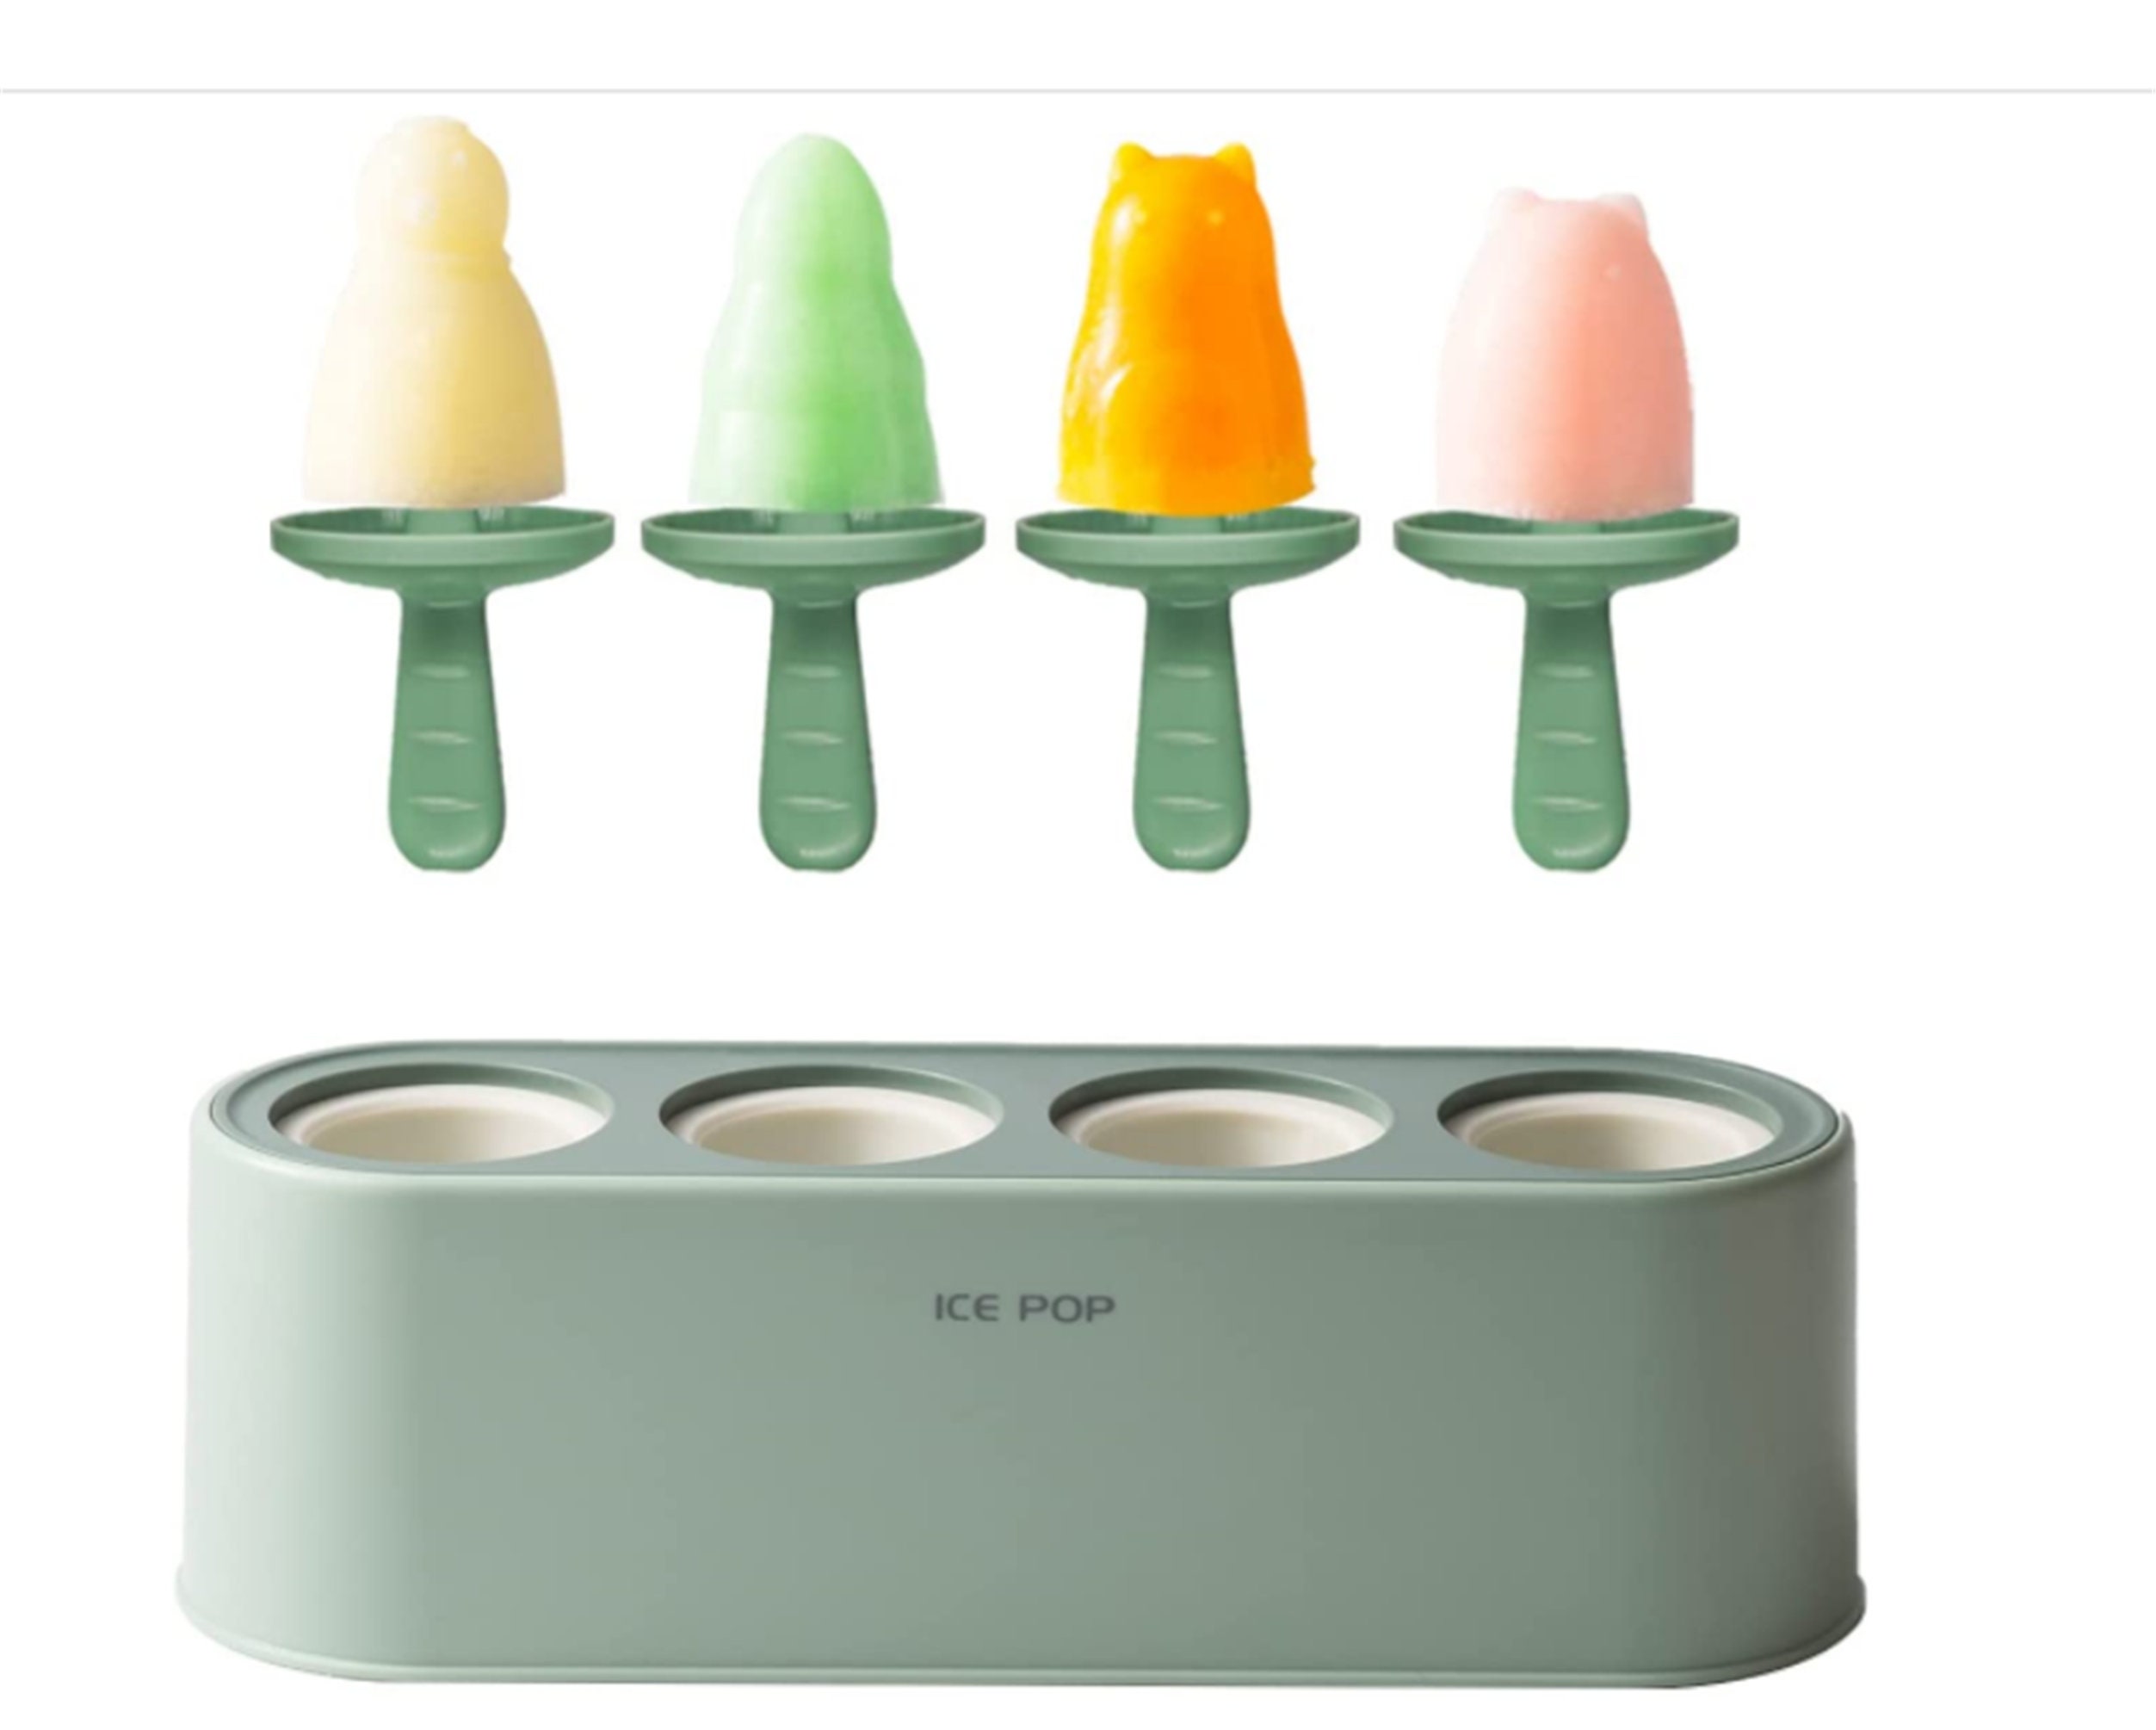 Zoku Homemade Popsicle Maker Review - A Mom's Take